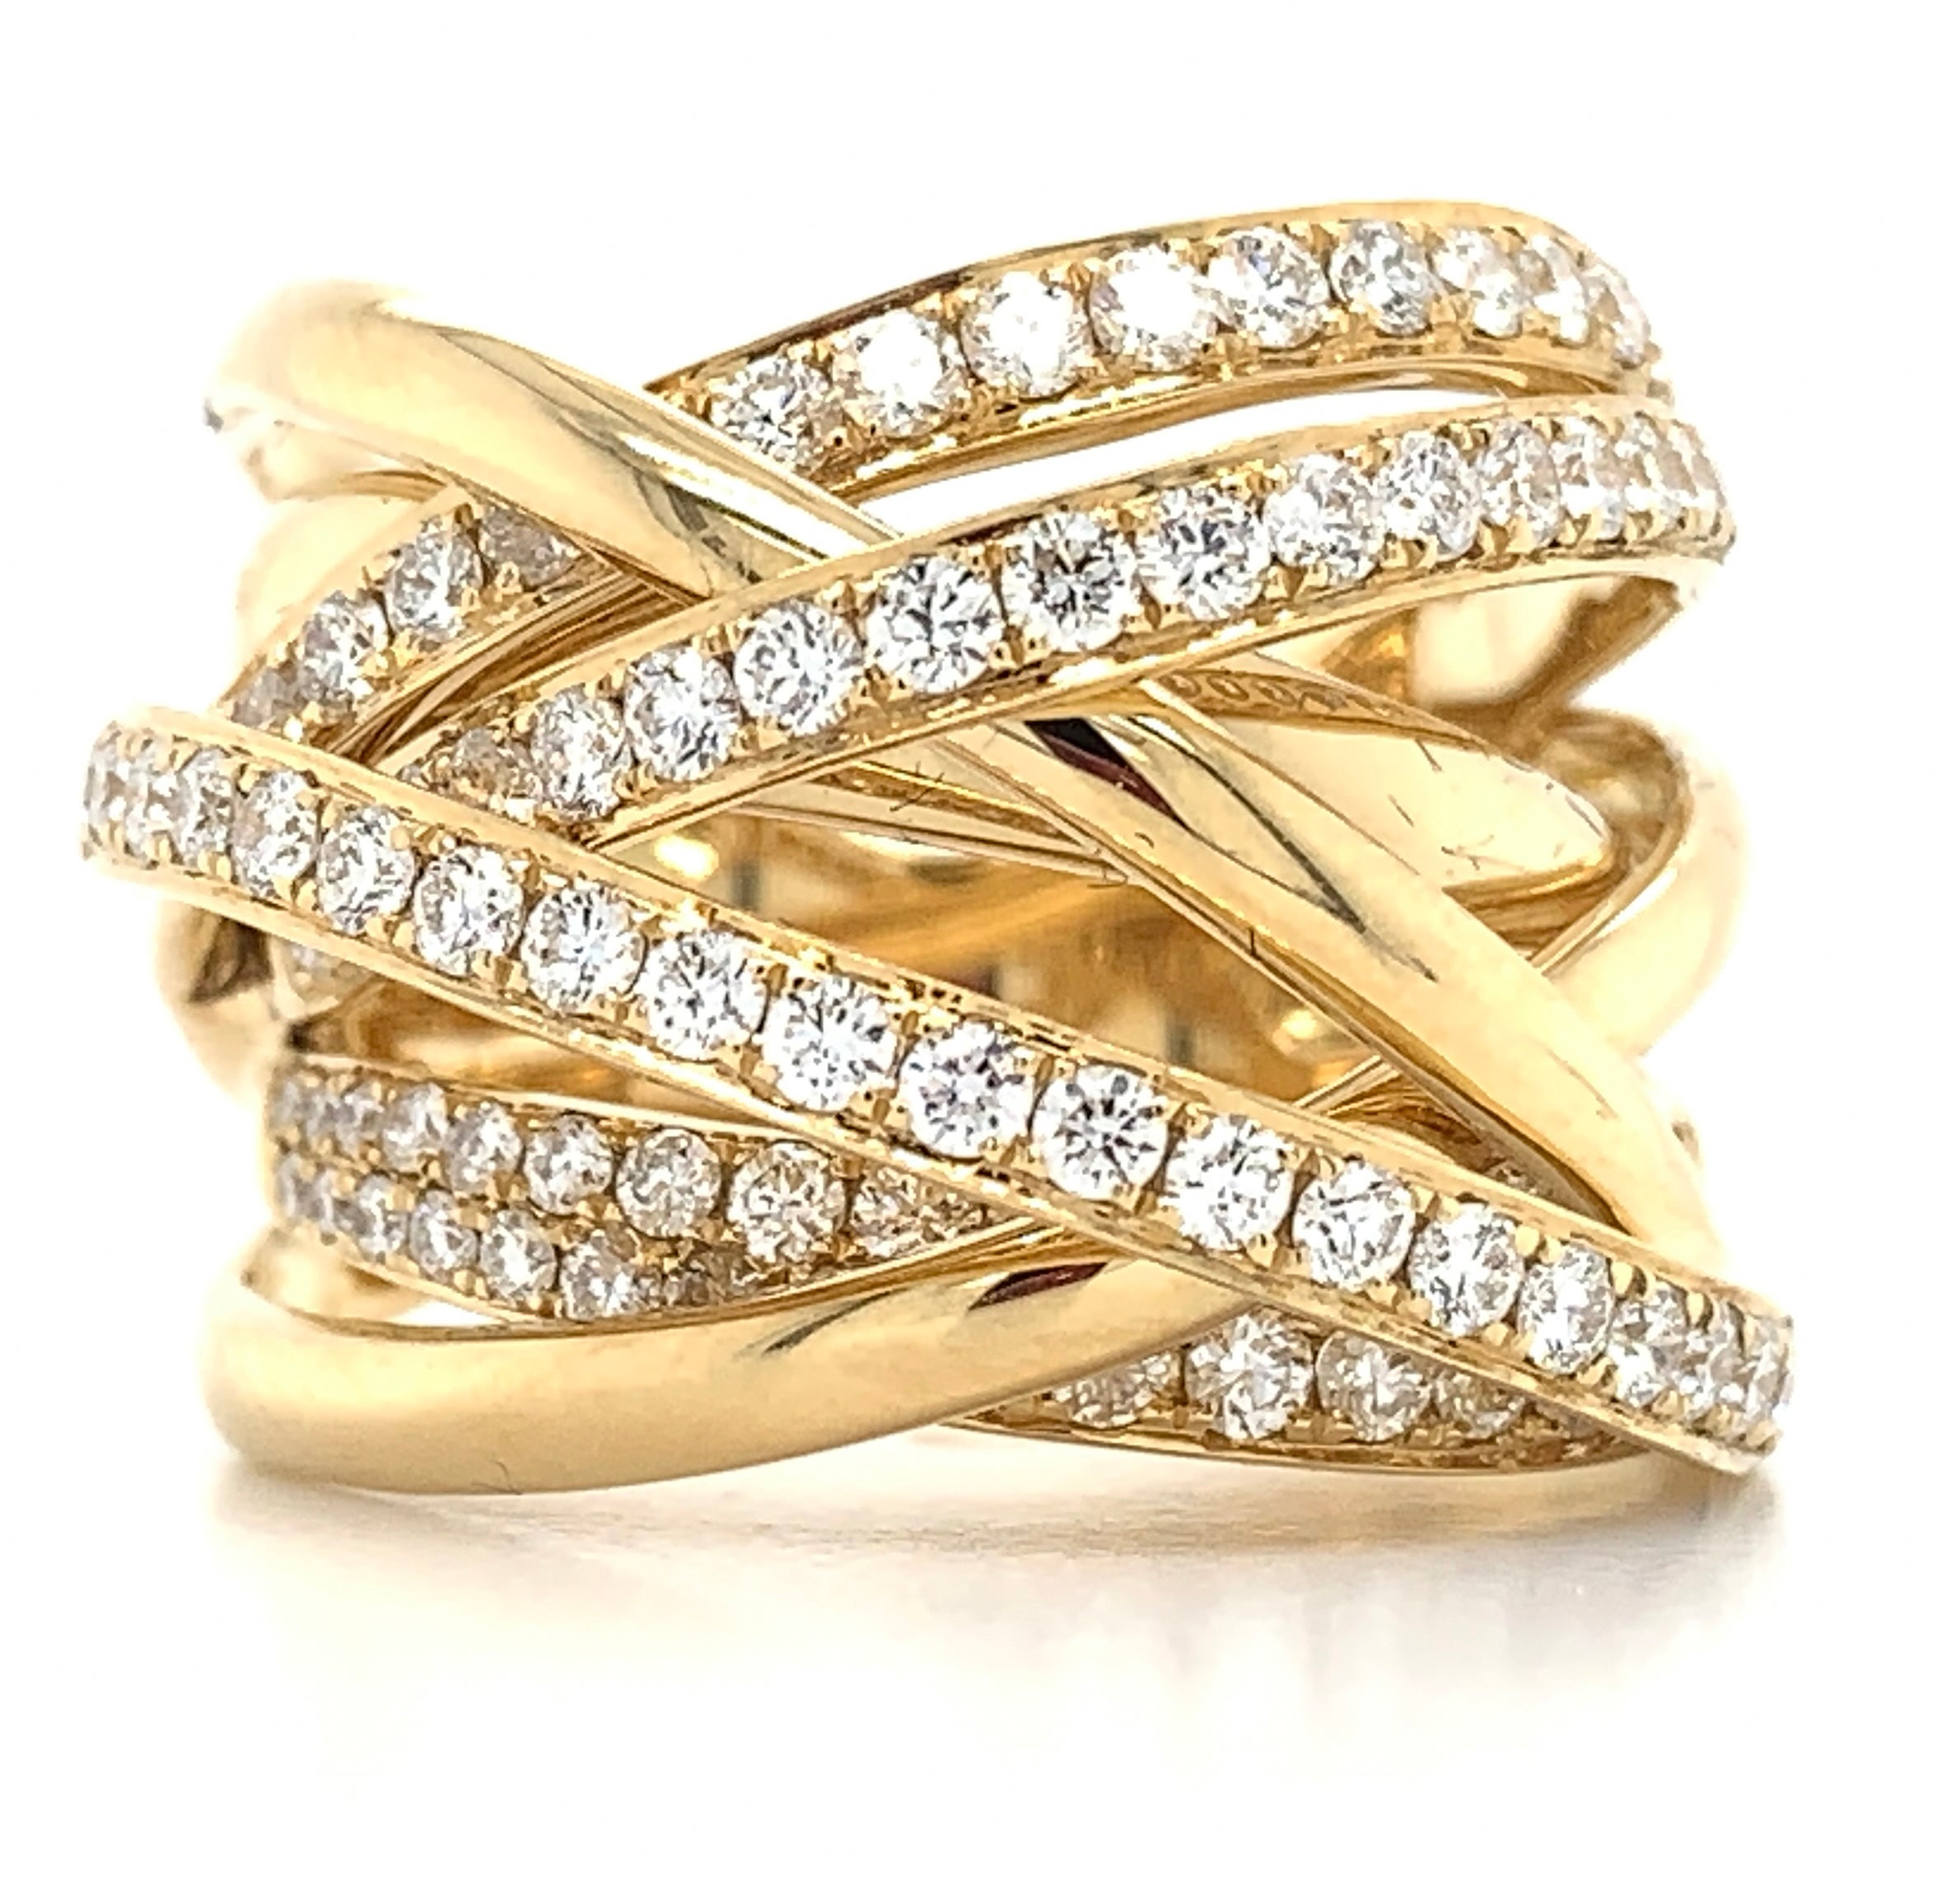 Diamond & Gold Criss-Cross Ring 1.31ct t.w. - HANIKEN JEWELERS NEW-YORK